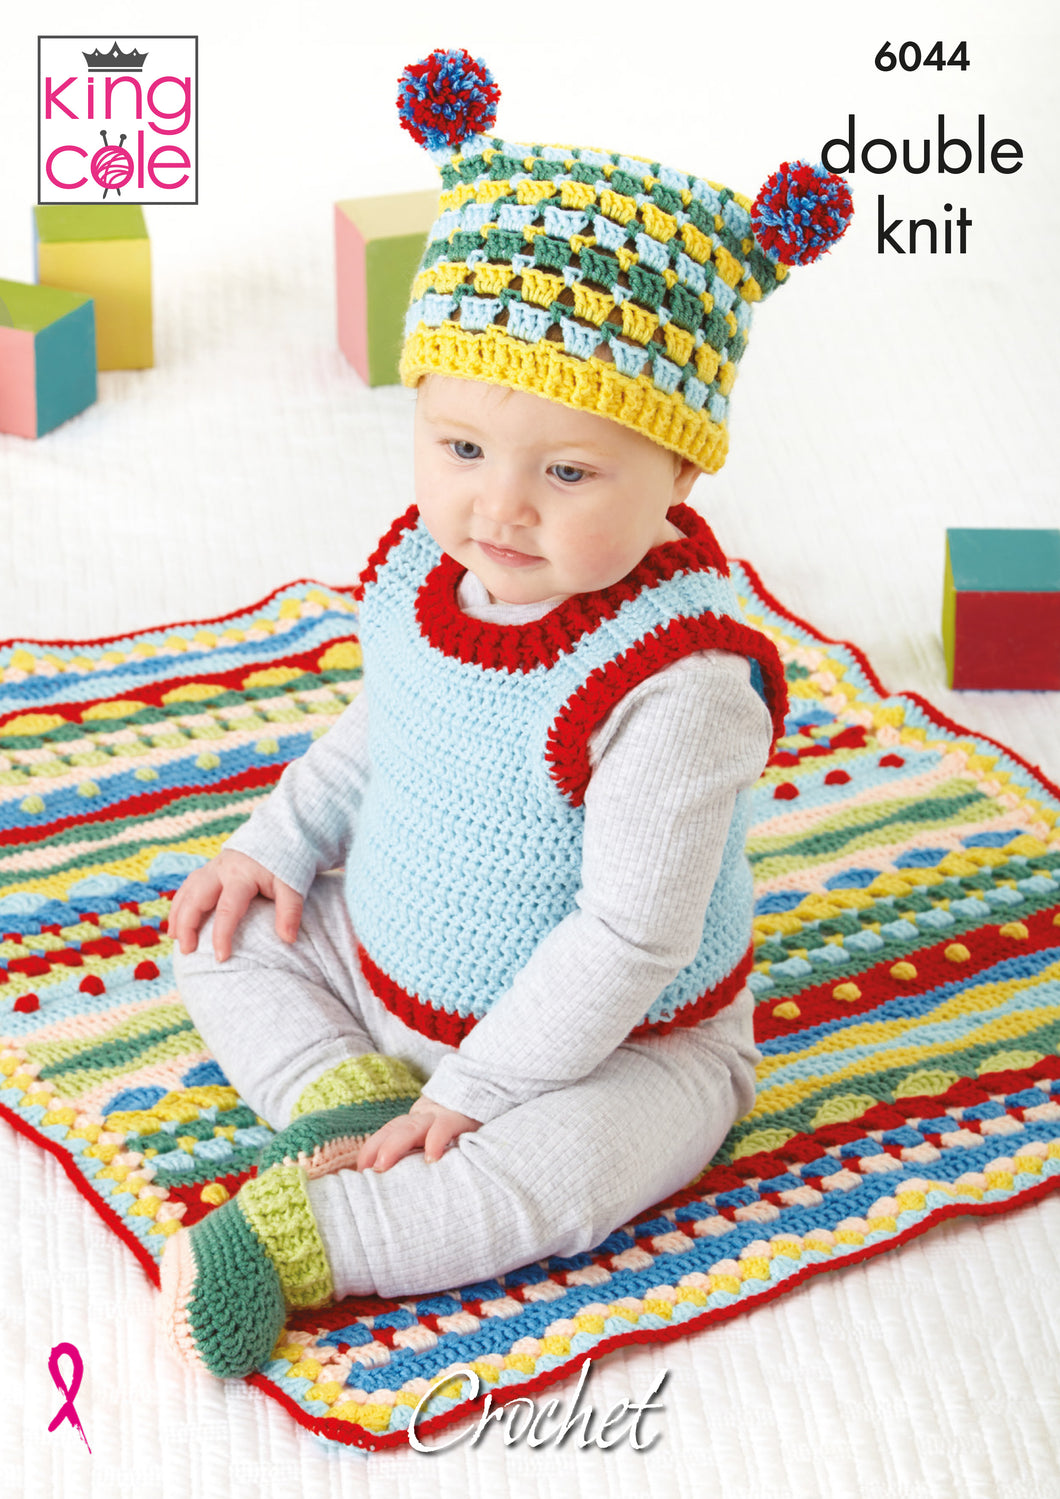 Modern Baby Set: Crocheted in King Cole Cherished DK 6044